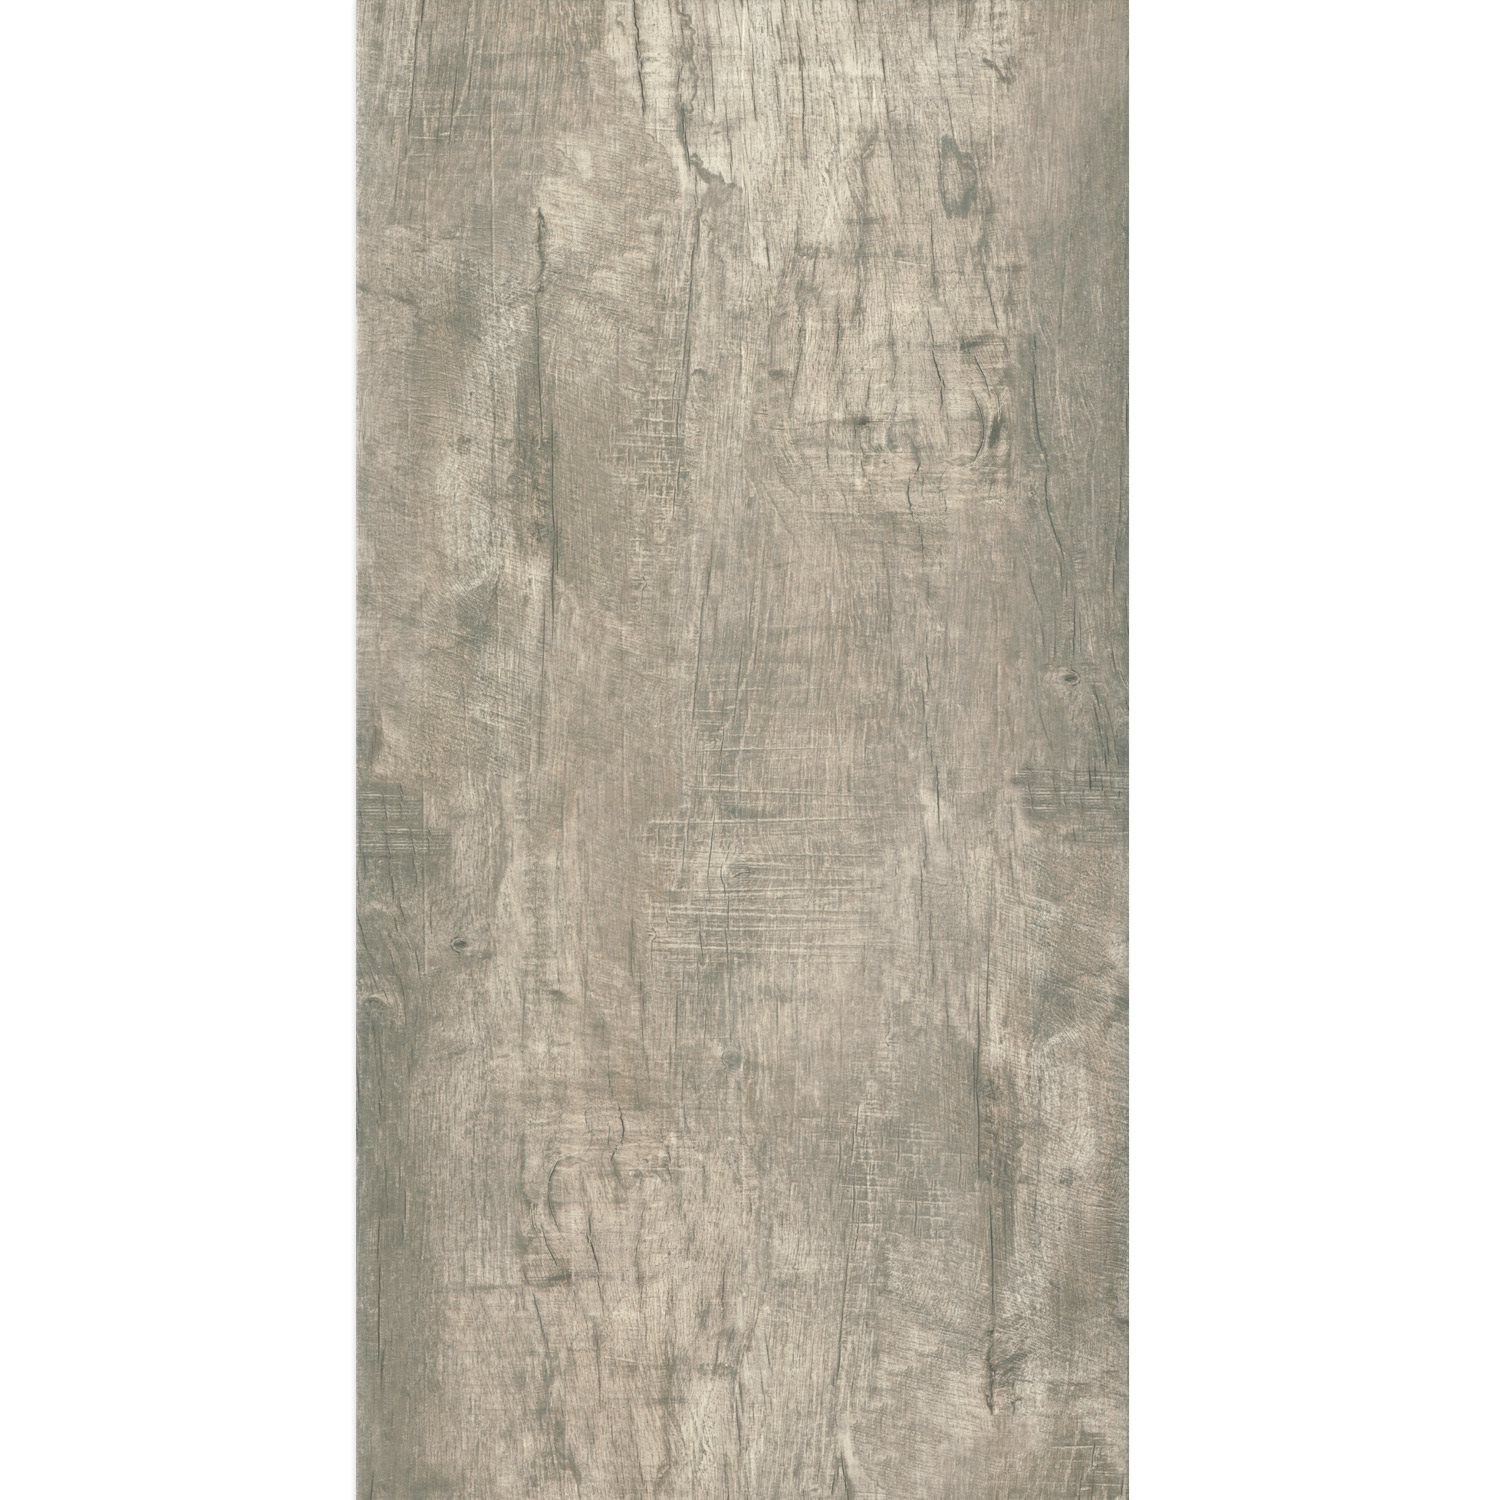 Holzoptik Bodenfliesen Oasis Komodo 45x90cm